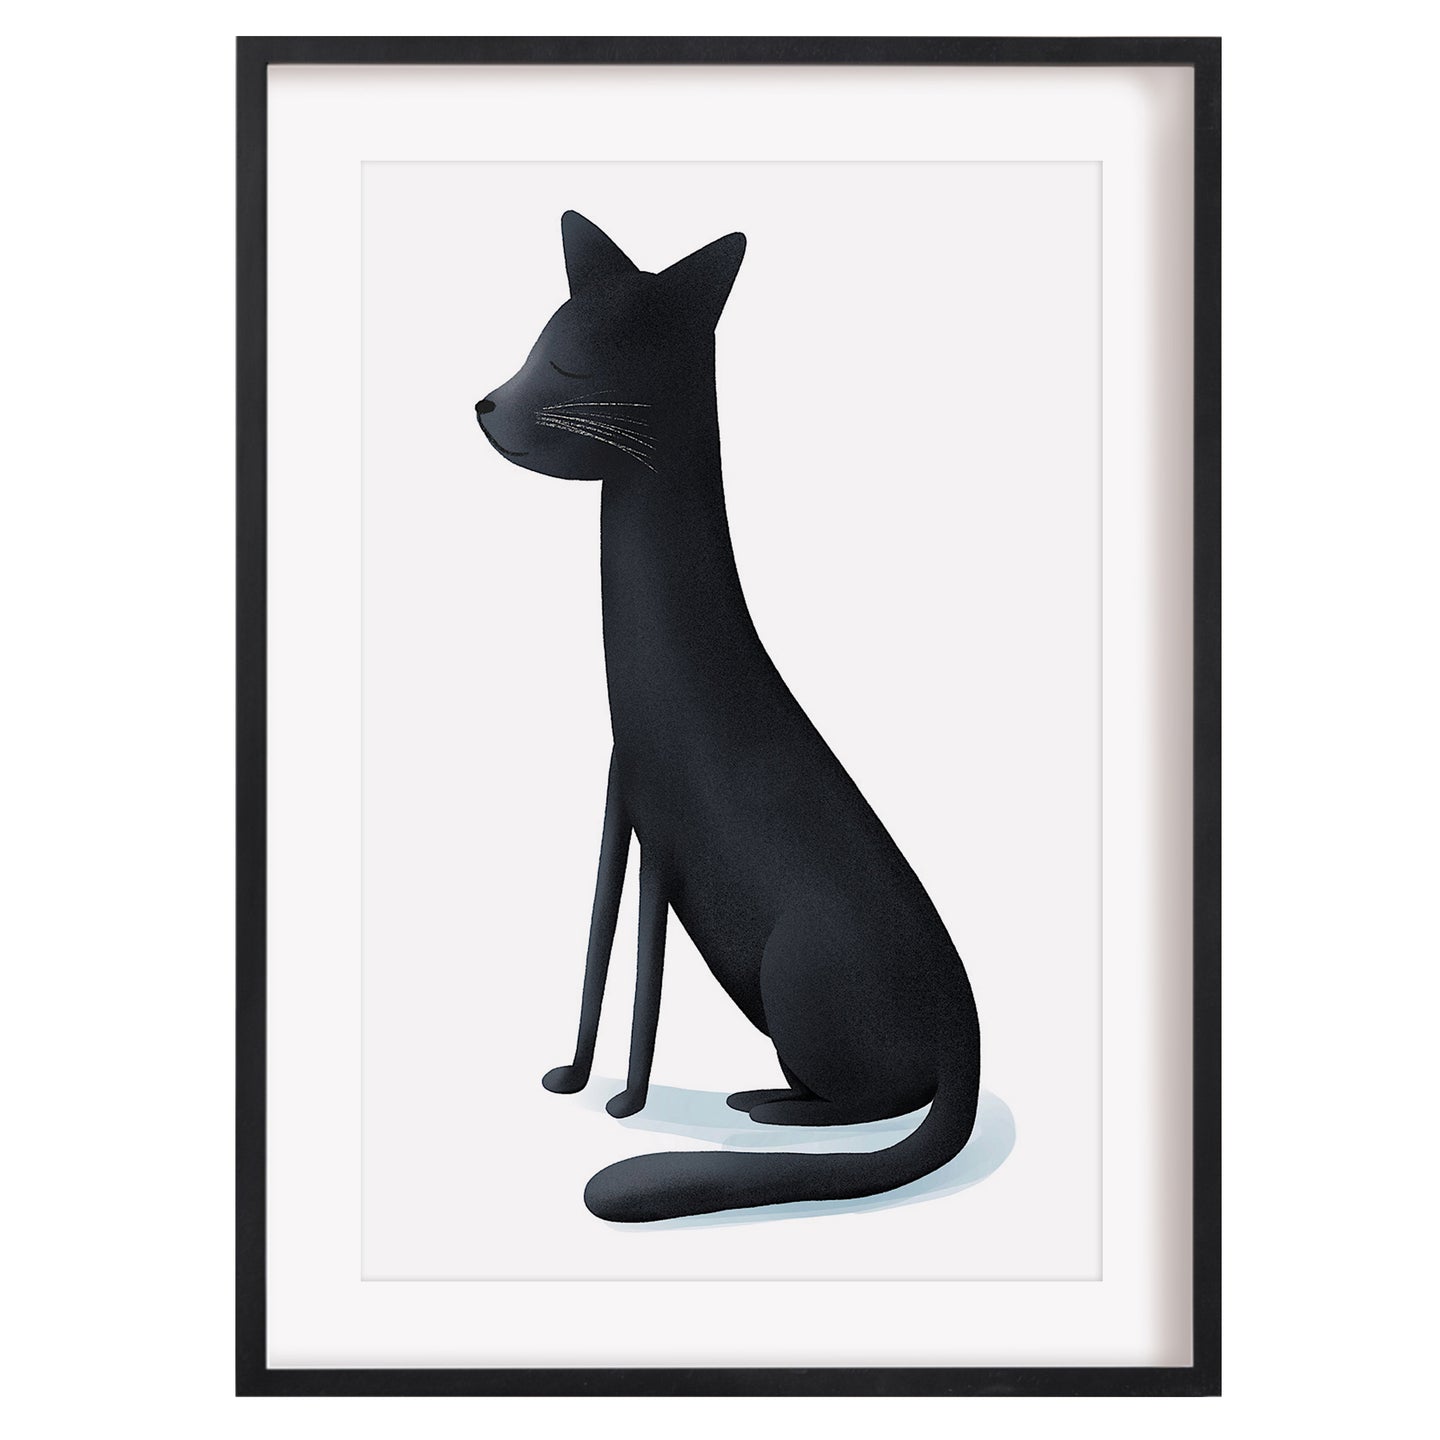 Black cat art print